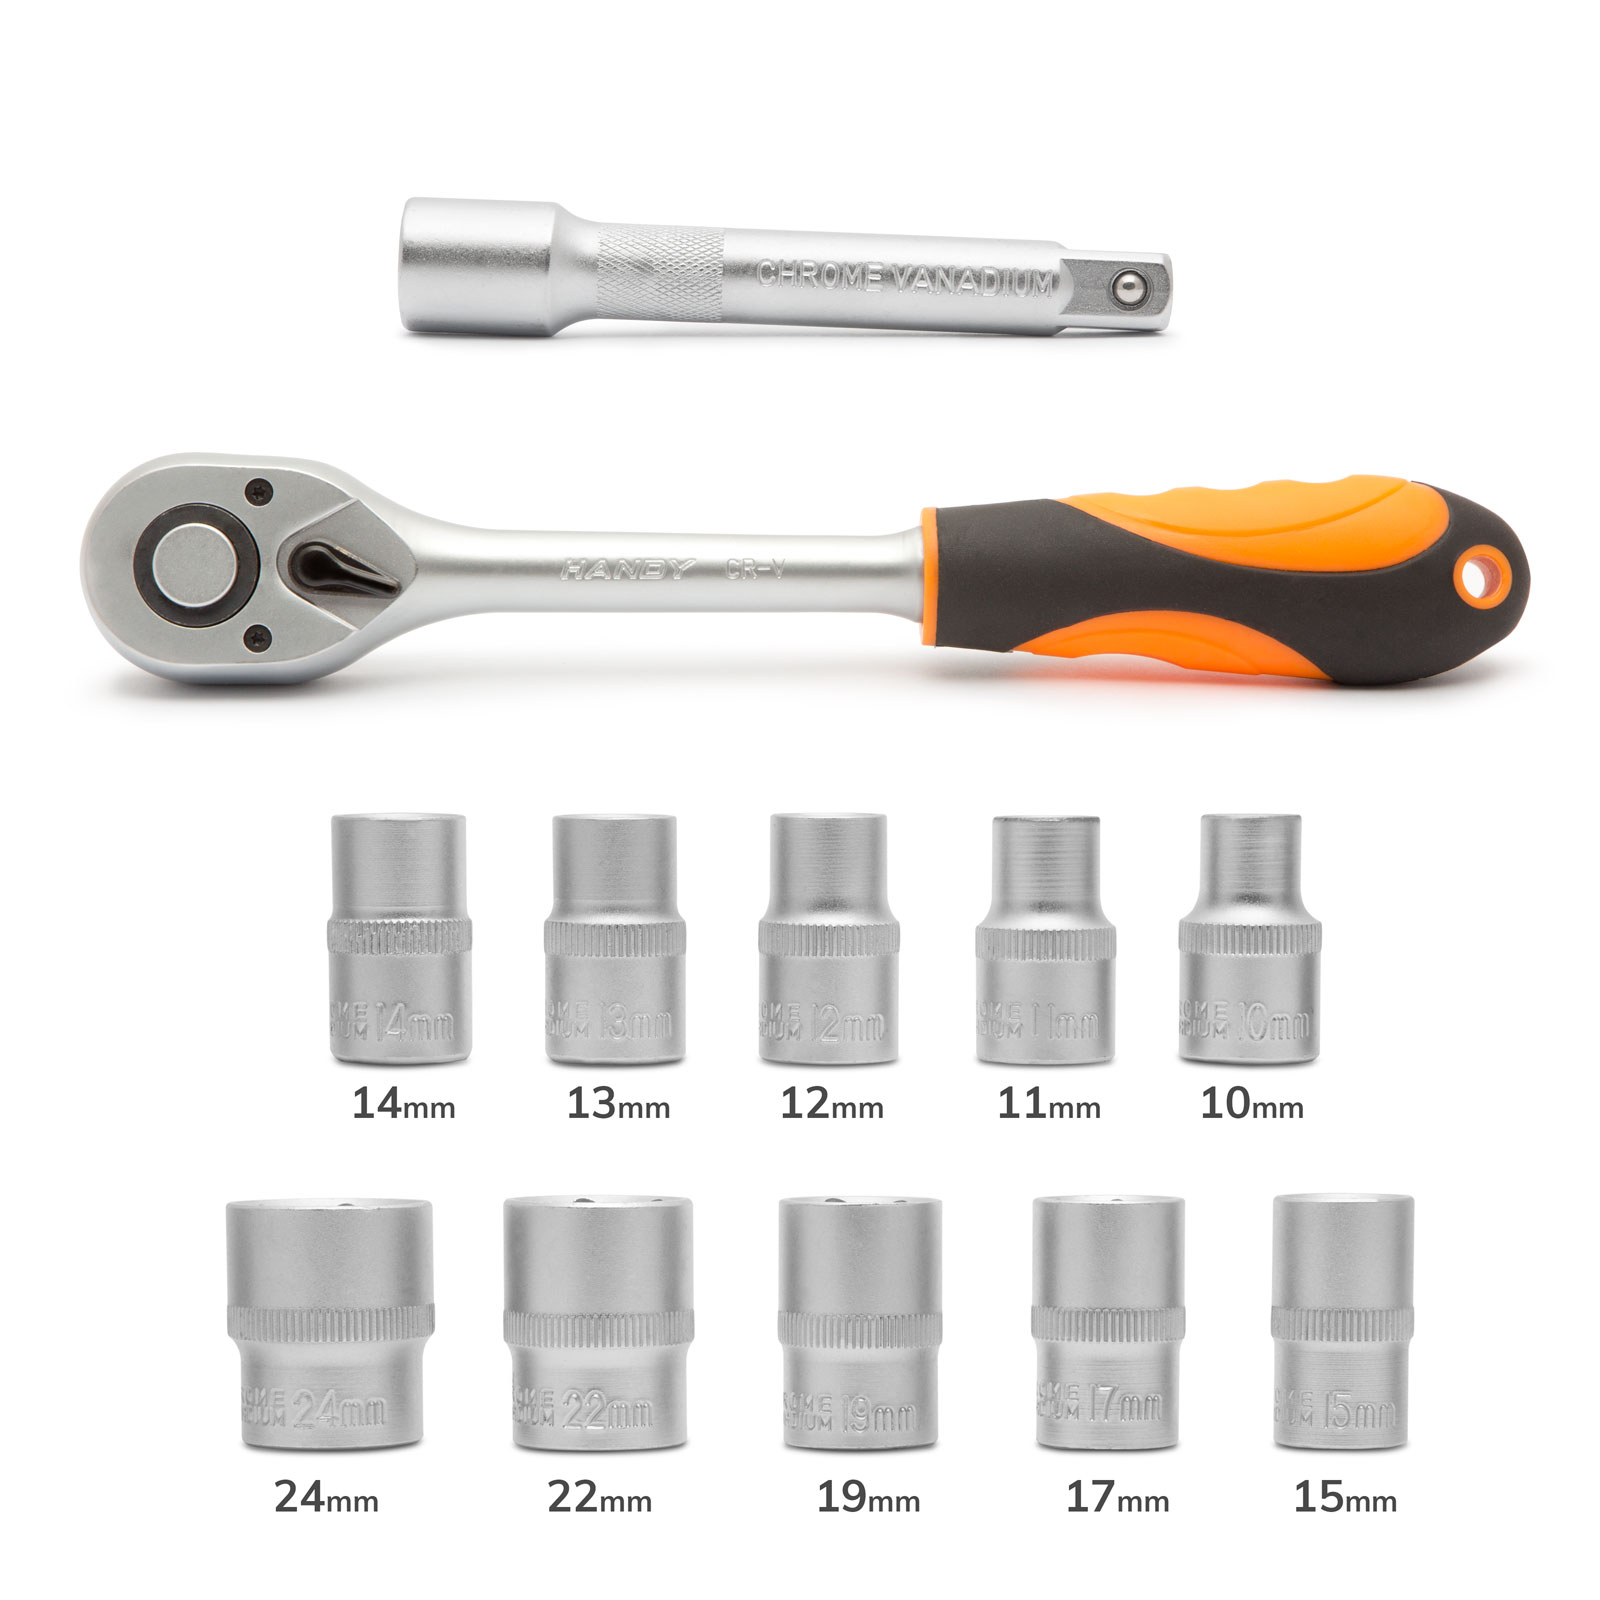 Ratchet wrench set - 1/2" - 12 pcs thumb